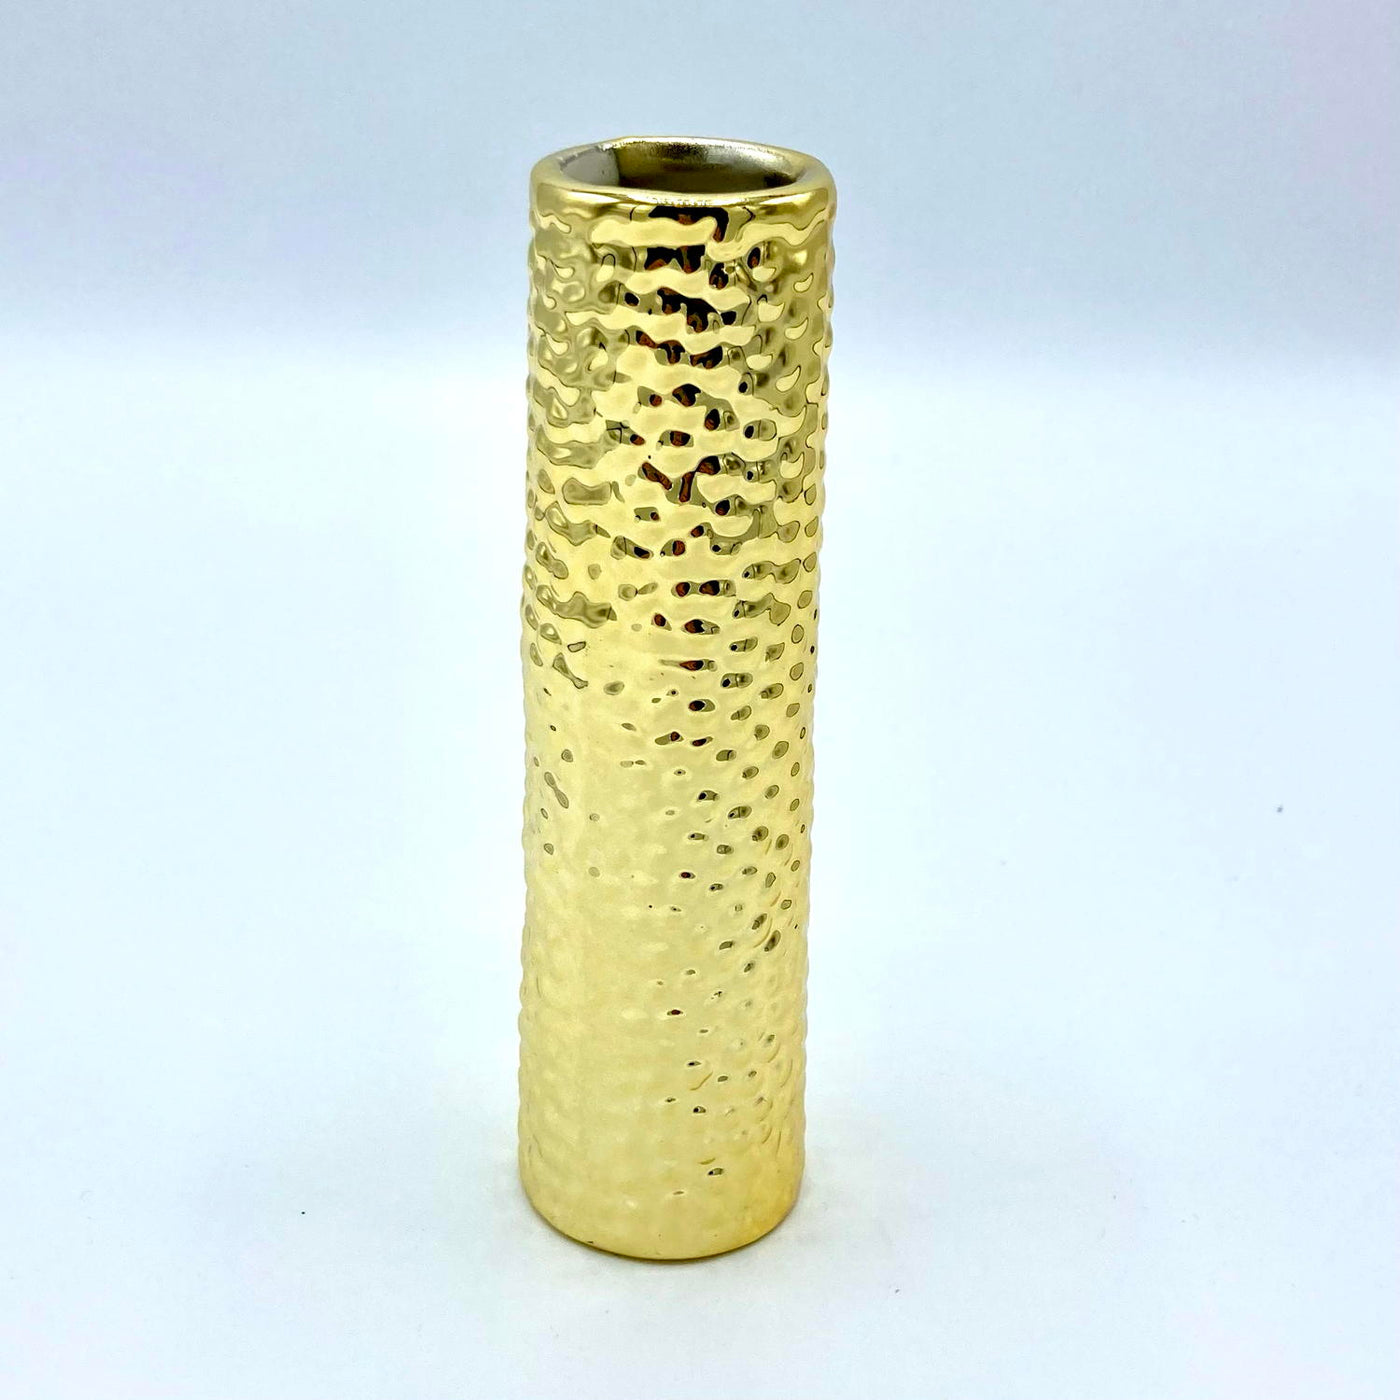 Shiny Gold Bud Vase by Chive